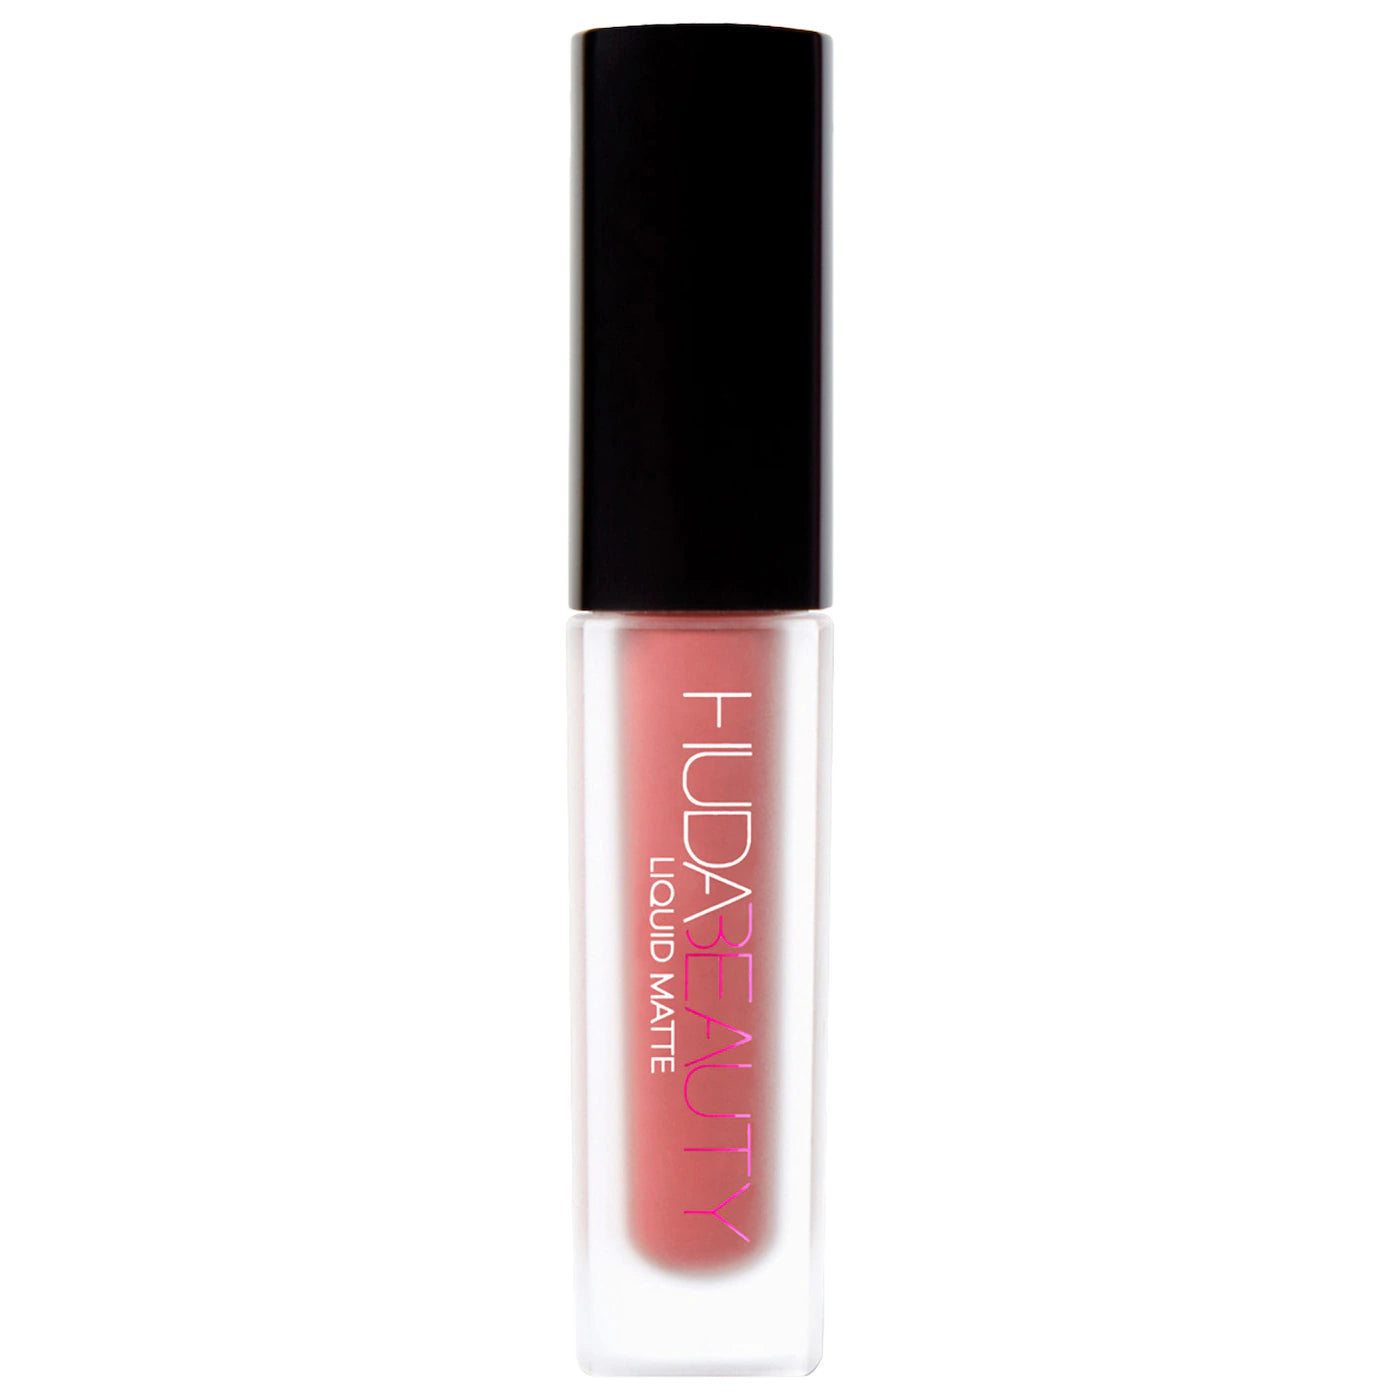 Liquid Matte Lipstick in shade Perfectionist Trial Size